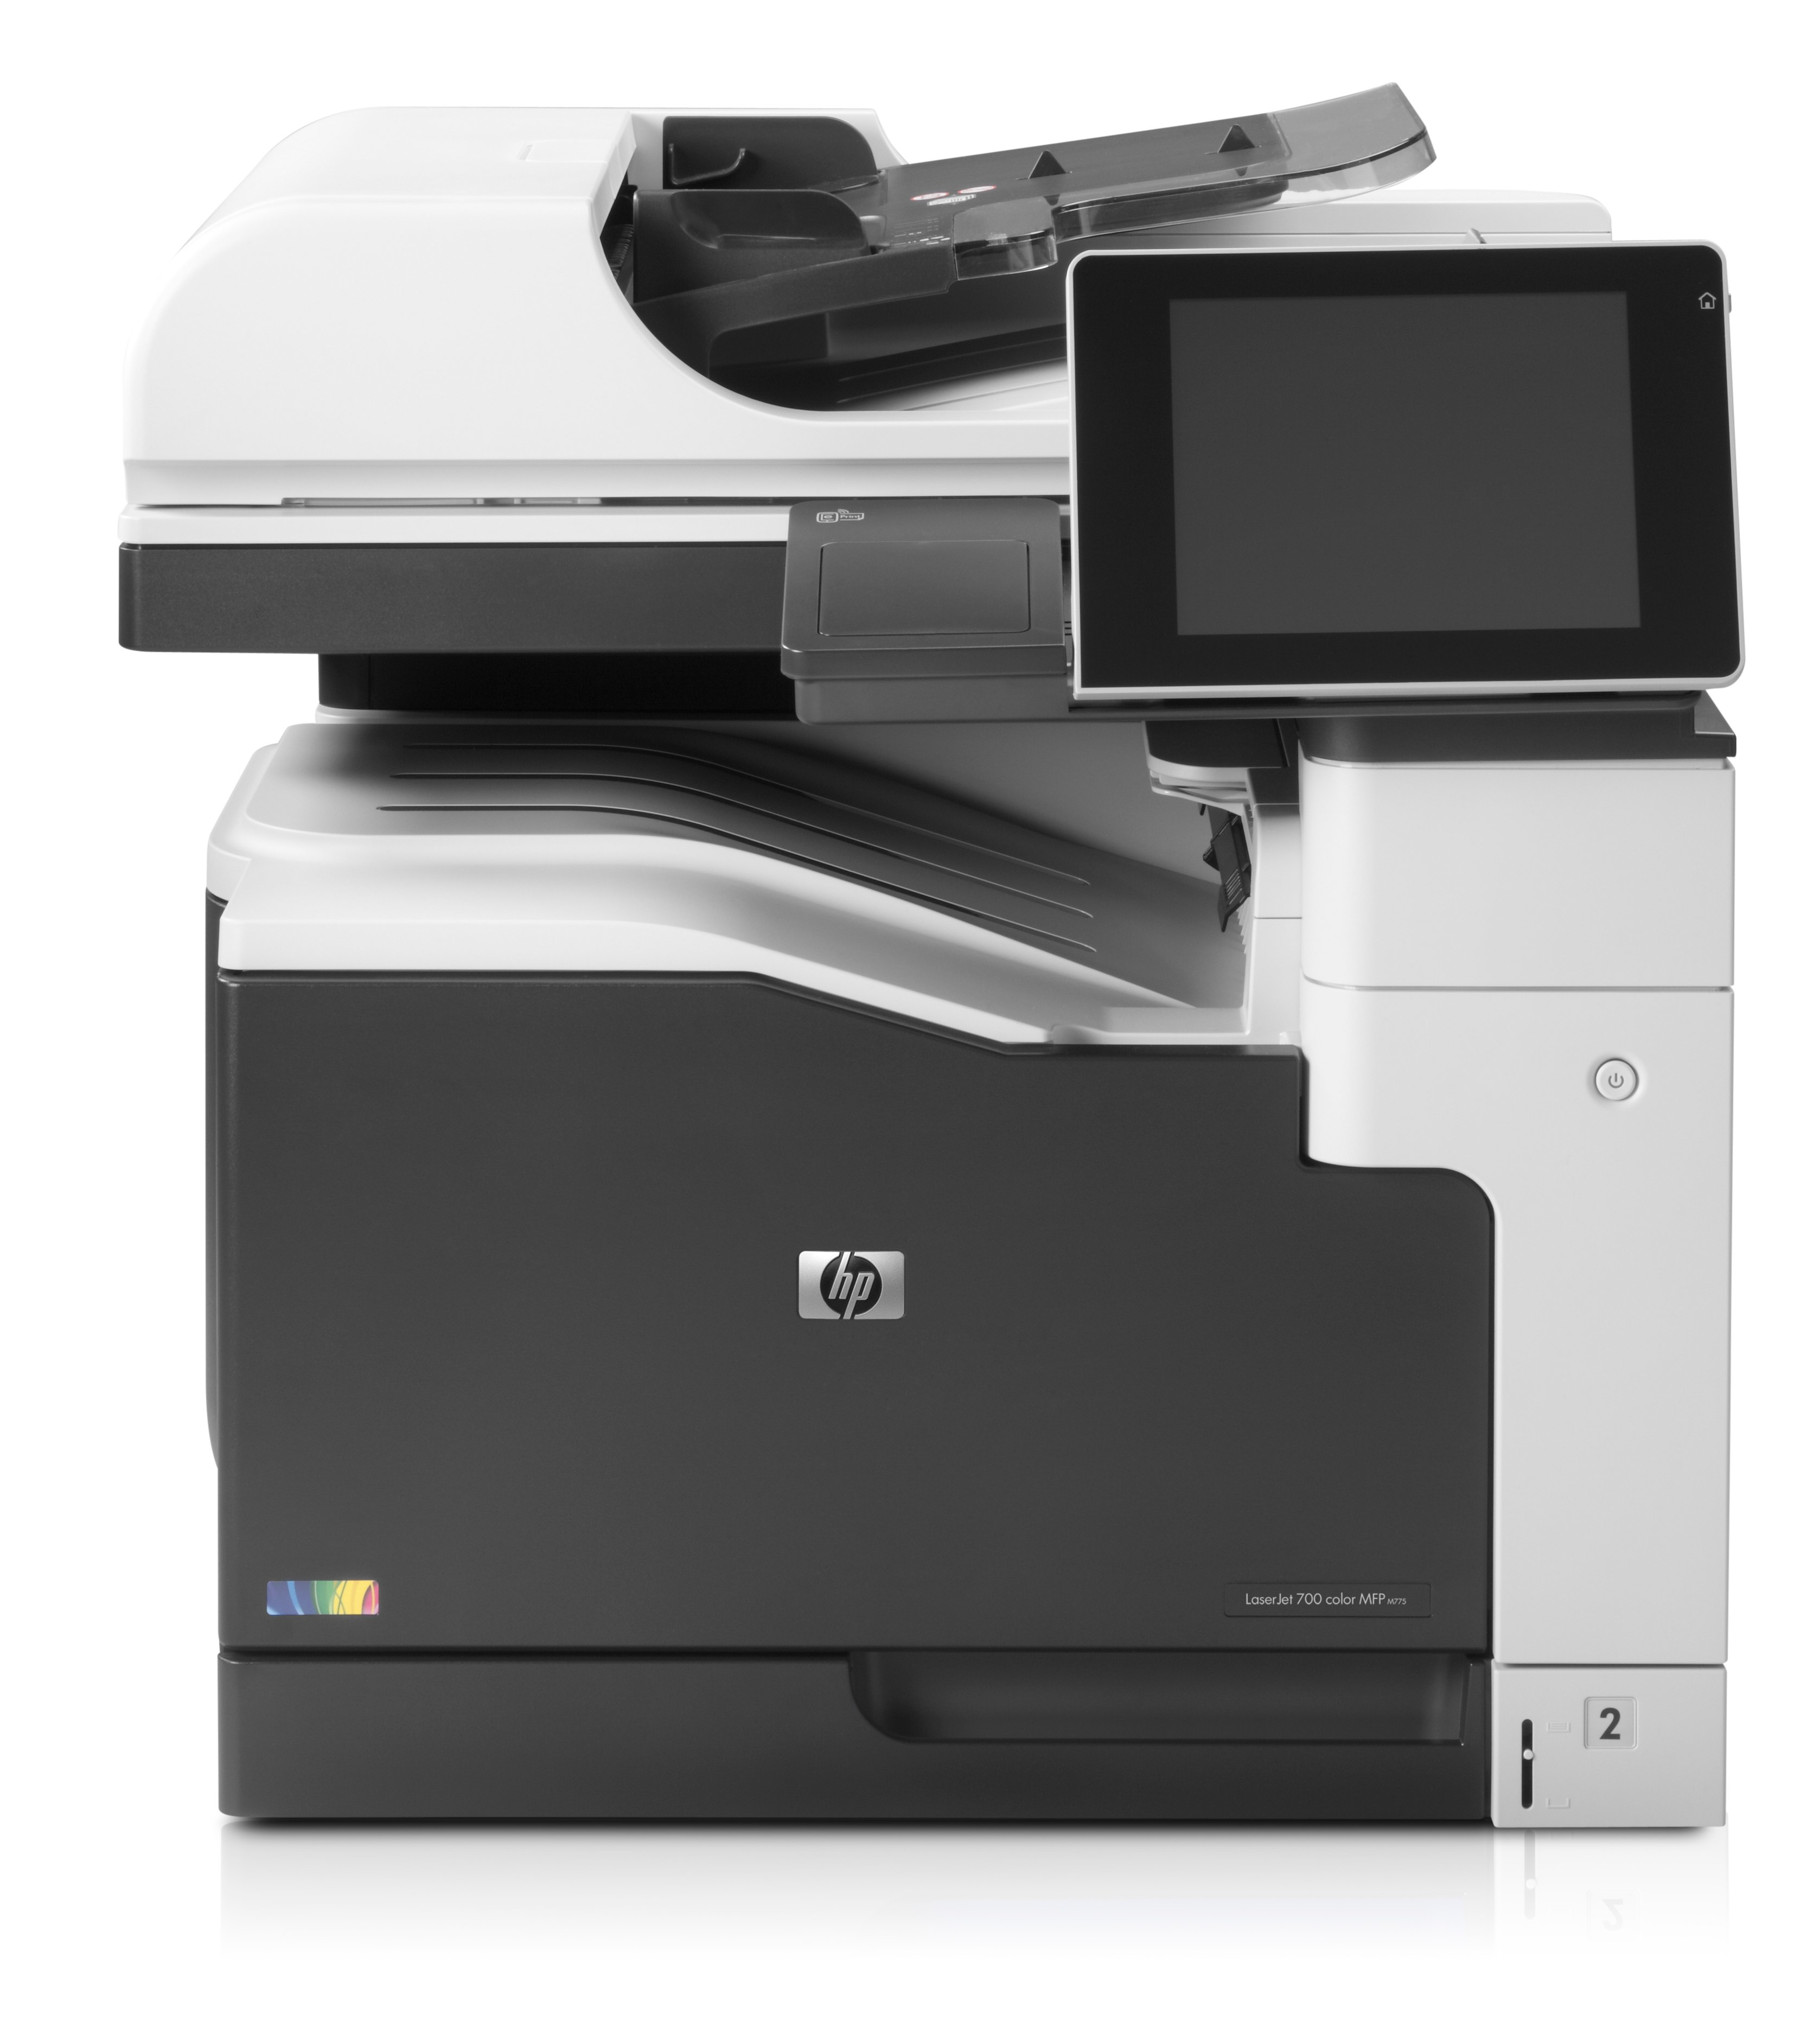 CC522a HP LaserJet M775dn Laser Printer - Refurbished